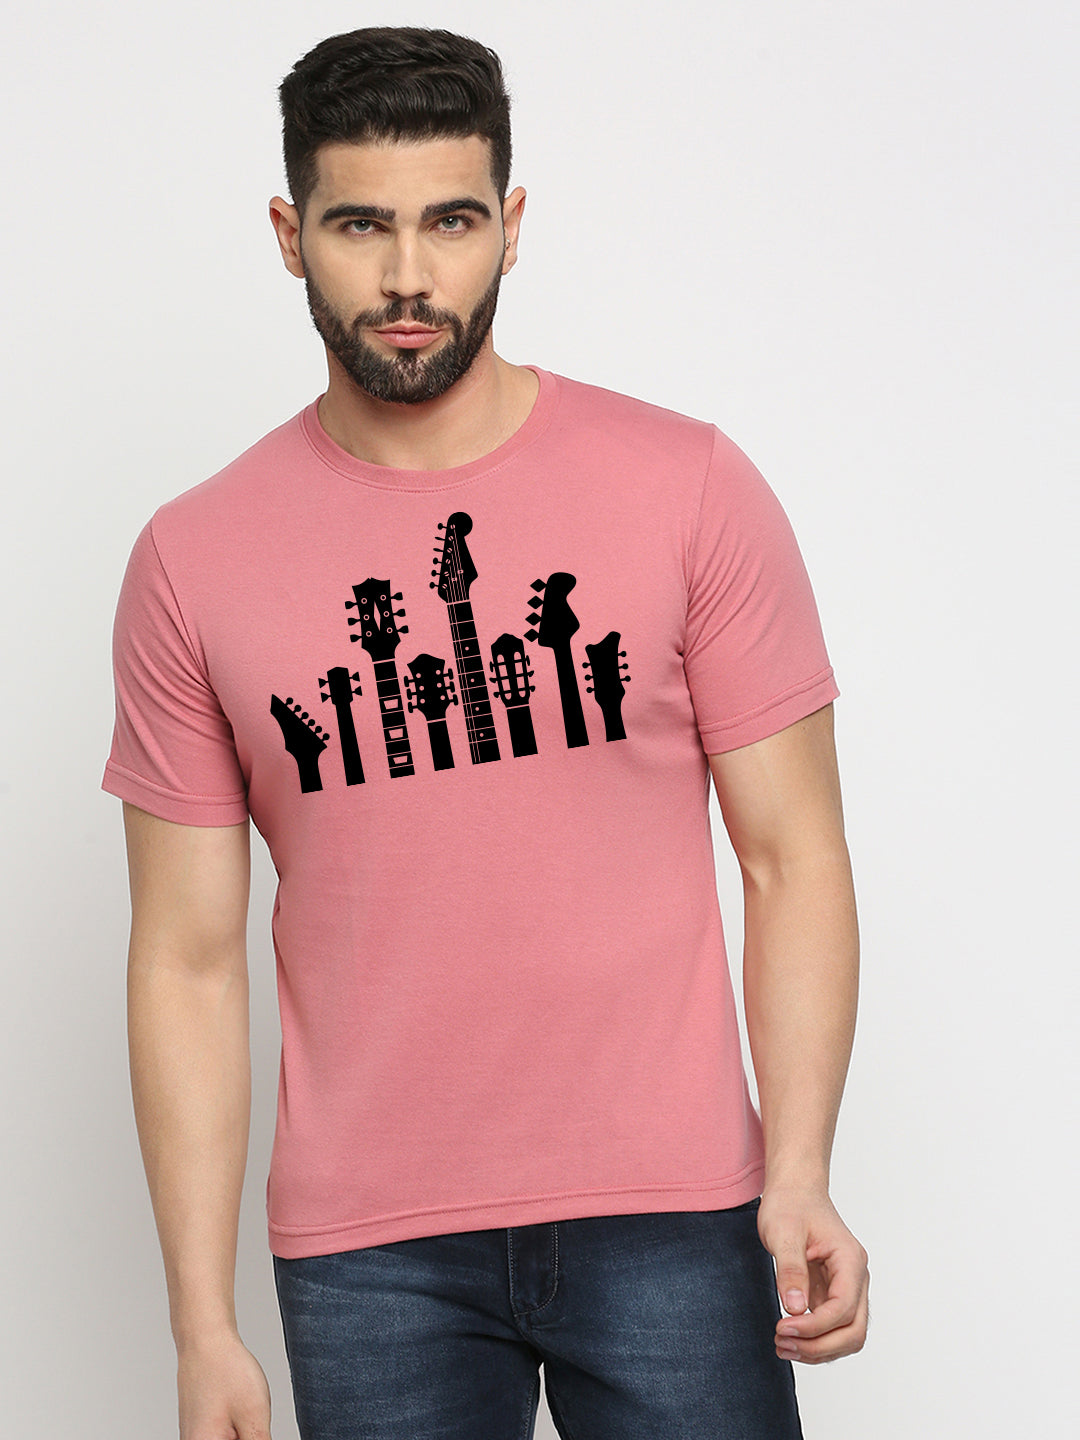 Guitar Headstocks T-Shirt